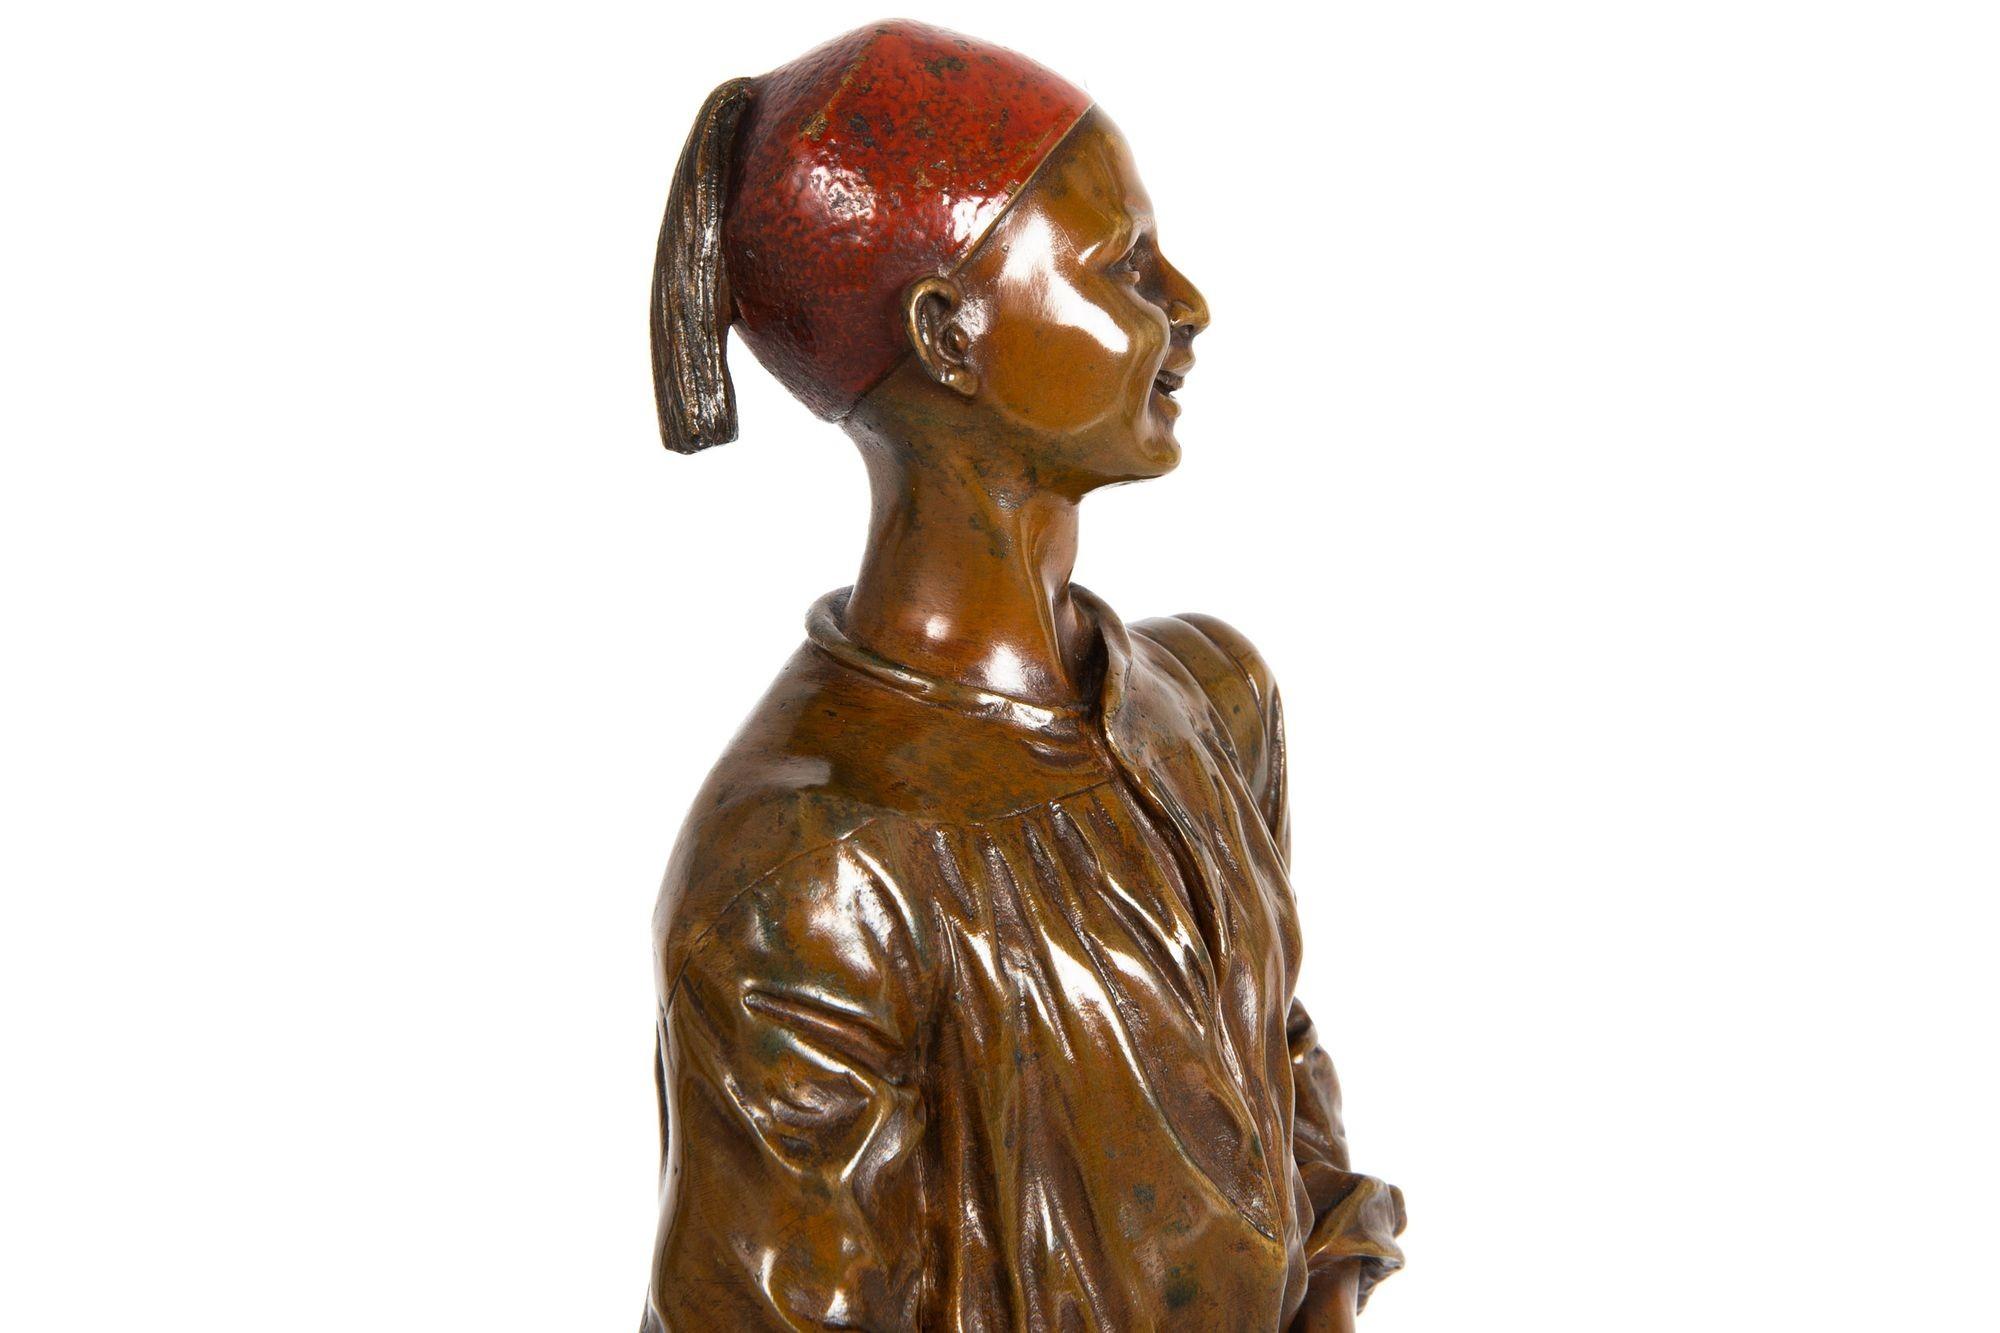 French Orientalist Bronze Sculpture “Arab Shoeshine” after Edouard Drouot For Sale 10